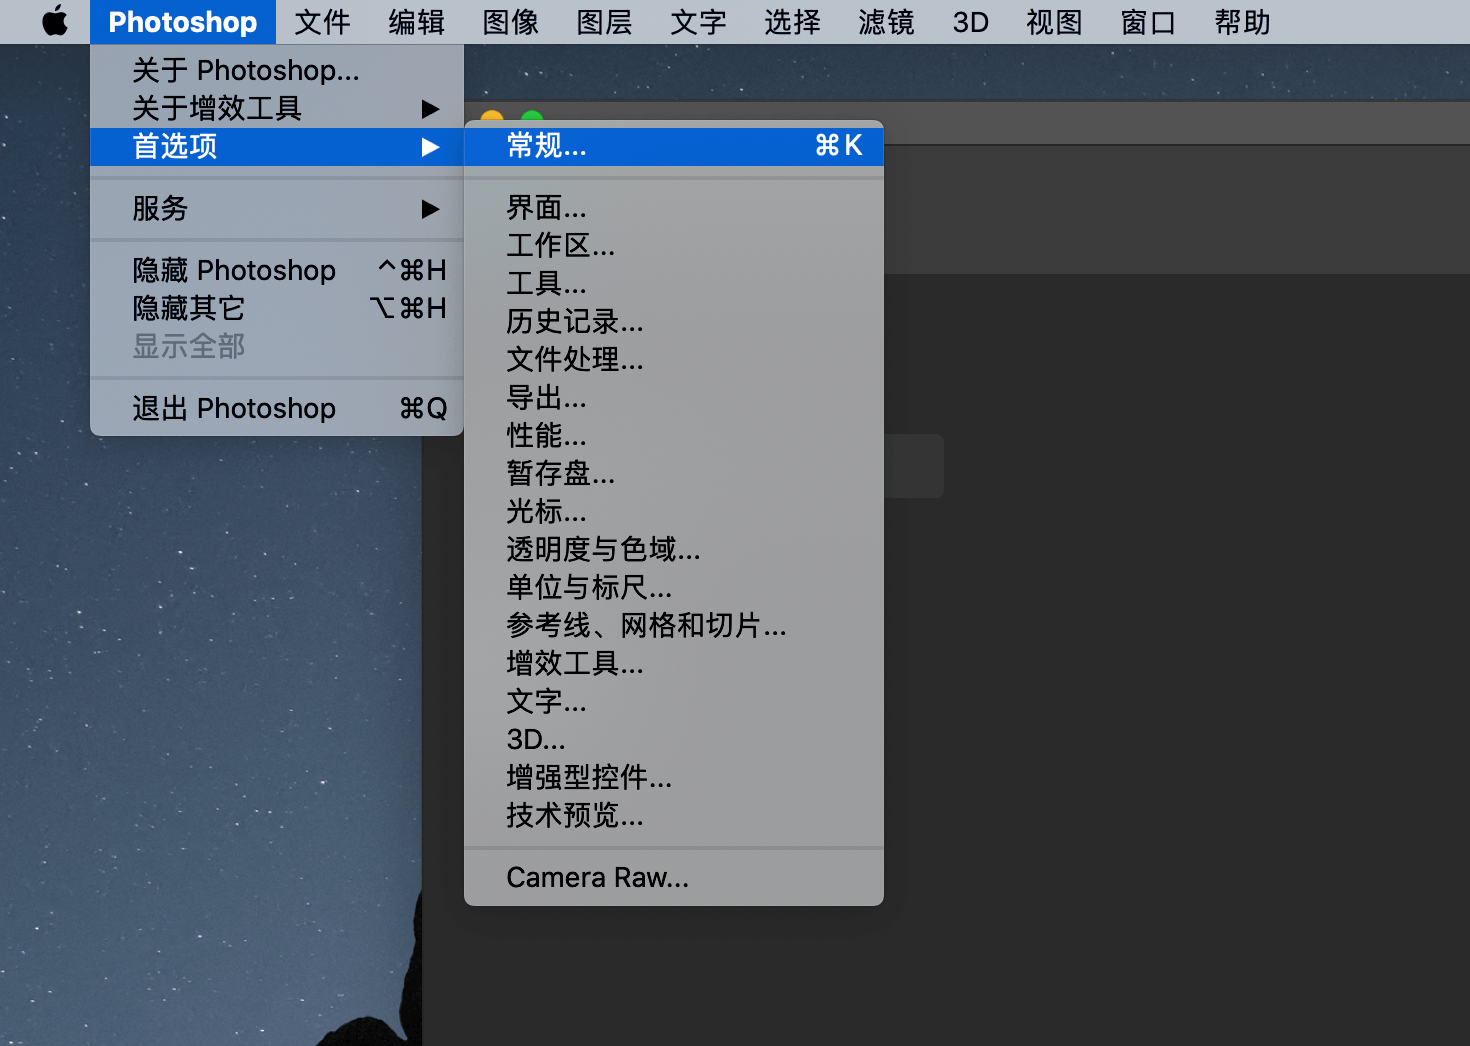 Photoshop 2020 Mac 打开图片黑屏不显示解决方法